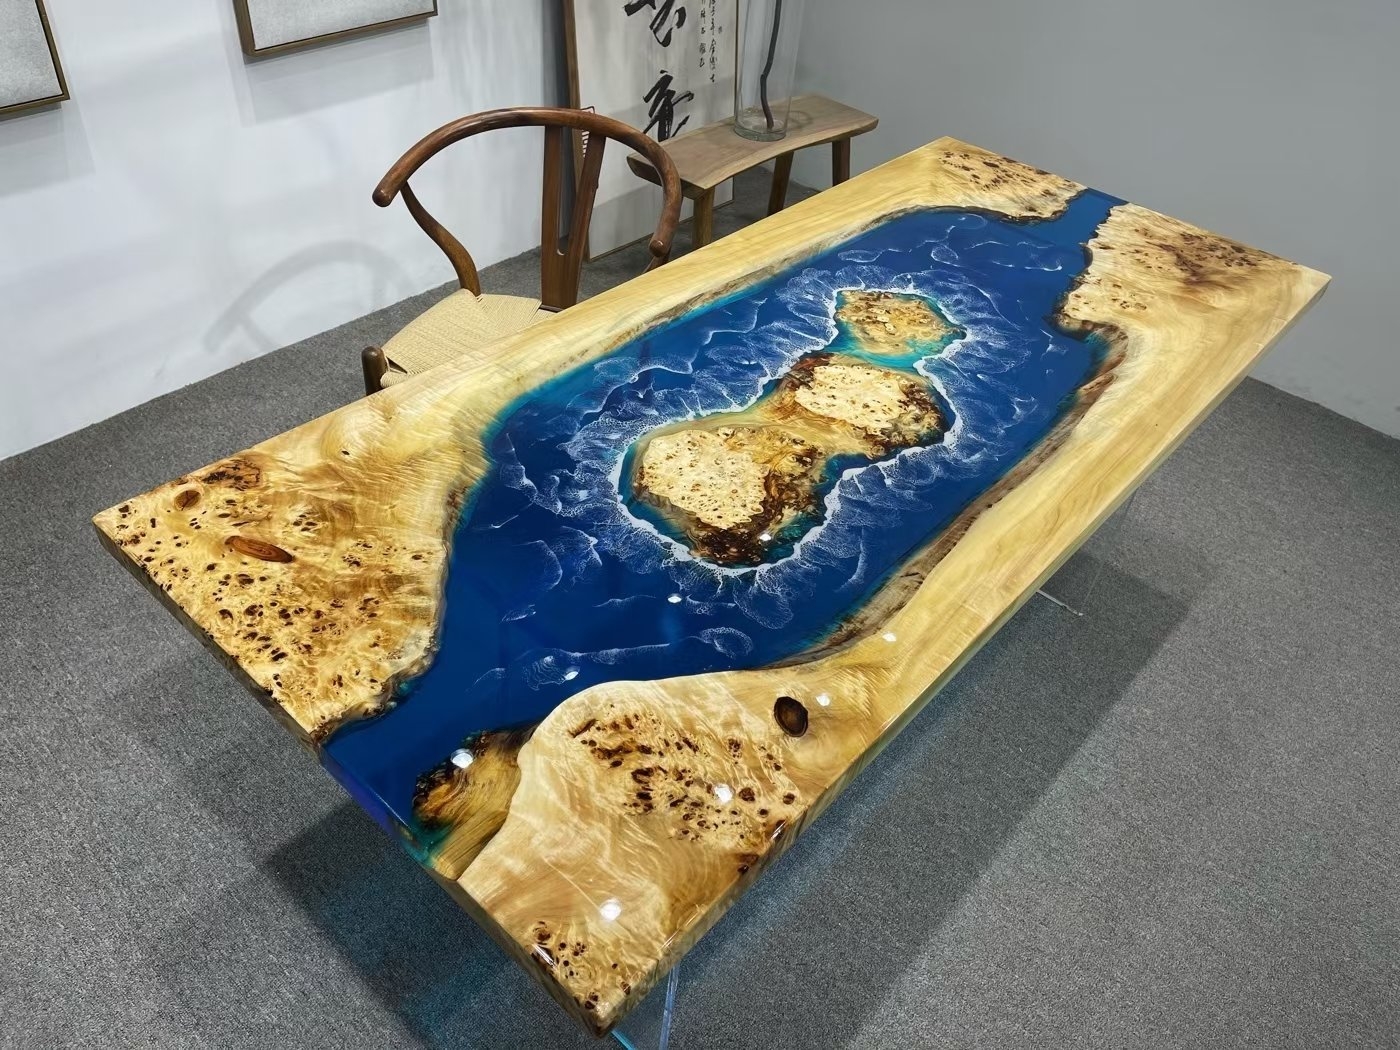 European poplar wood slab epoxy resin table with metal base